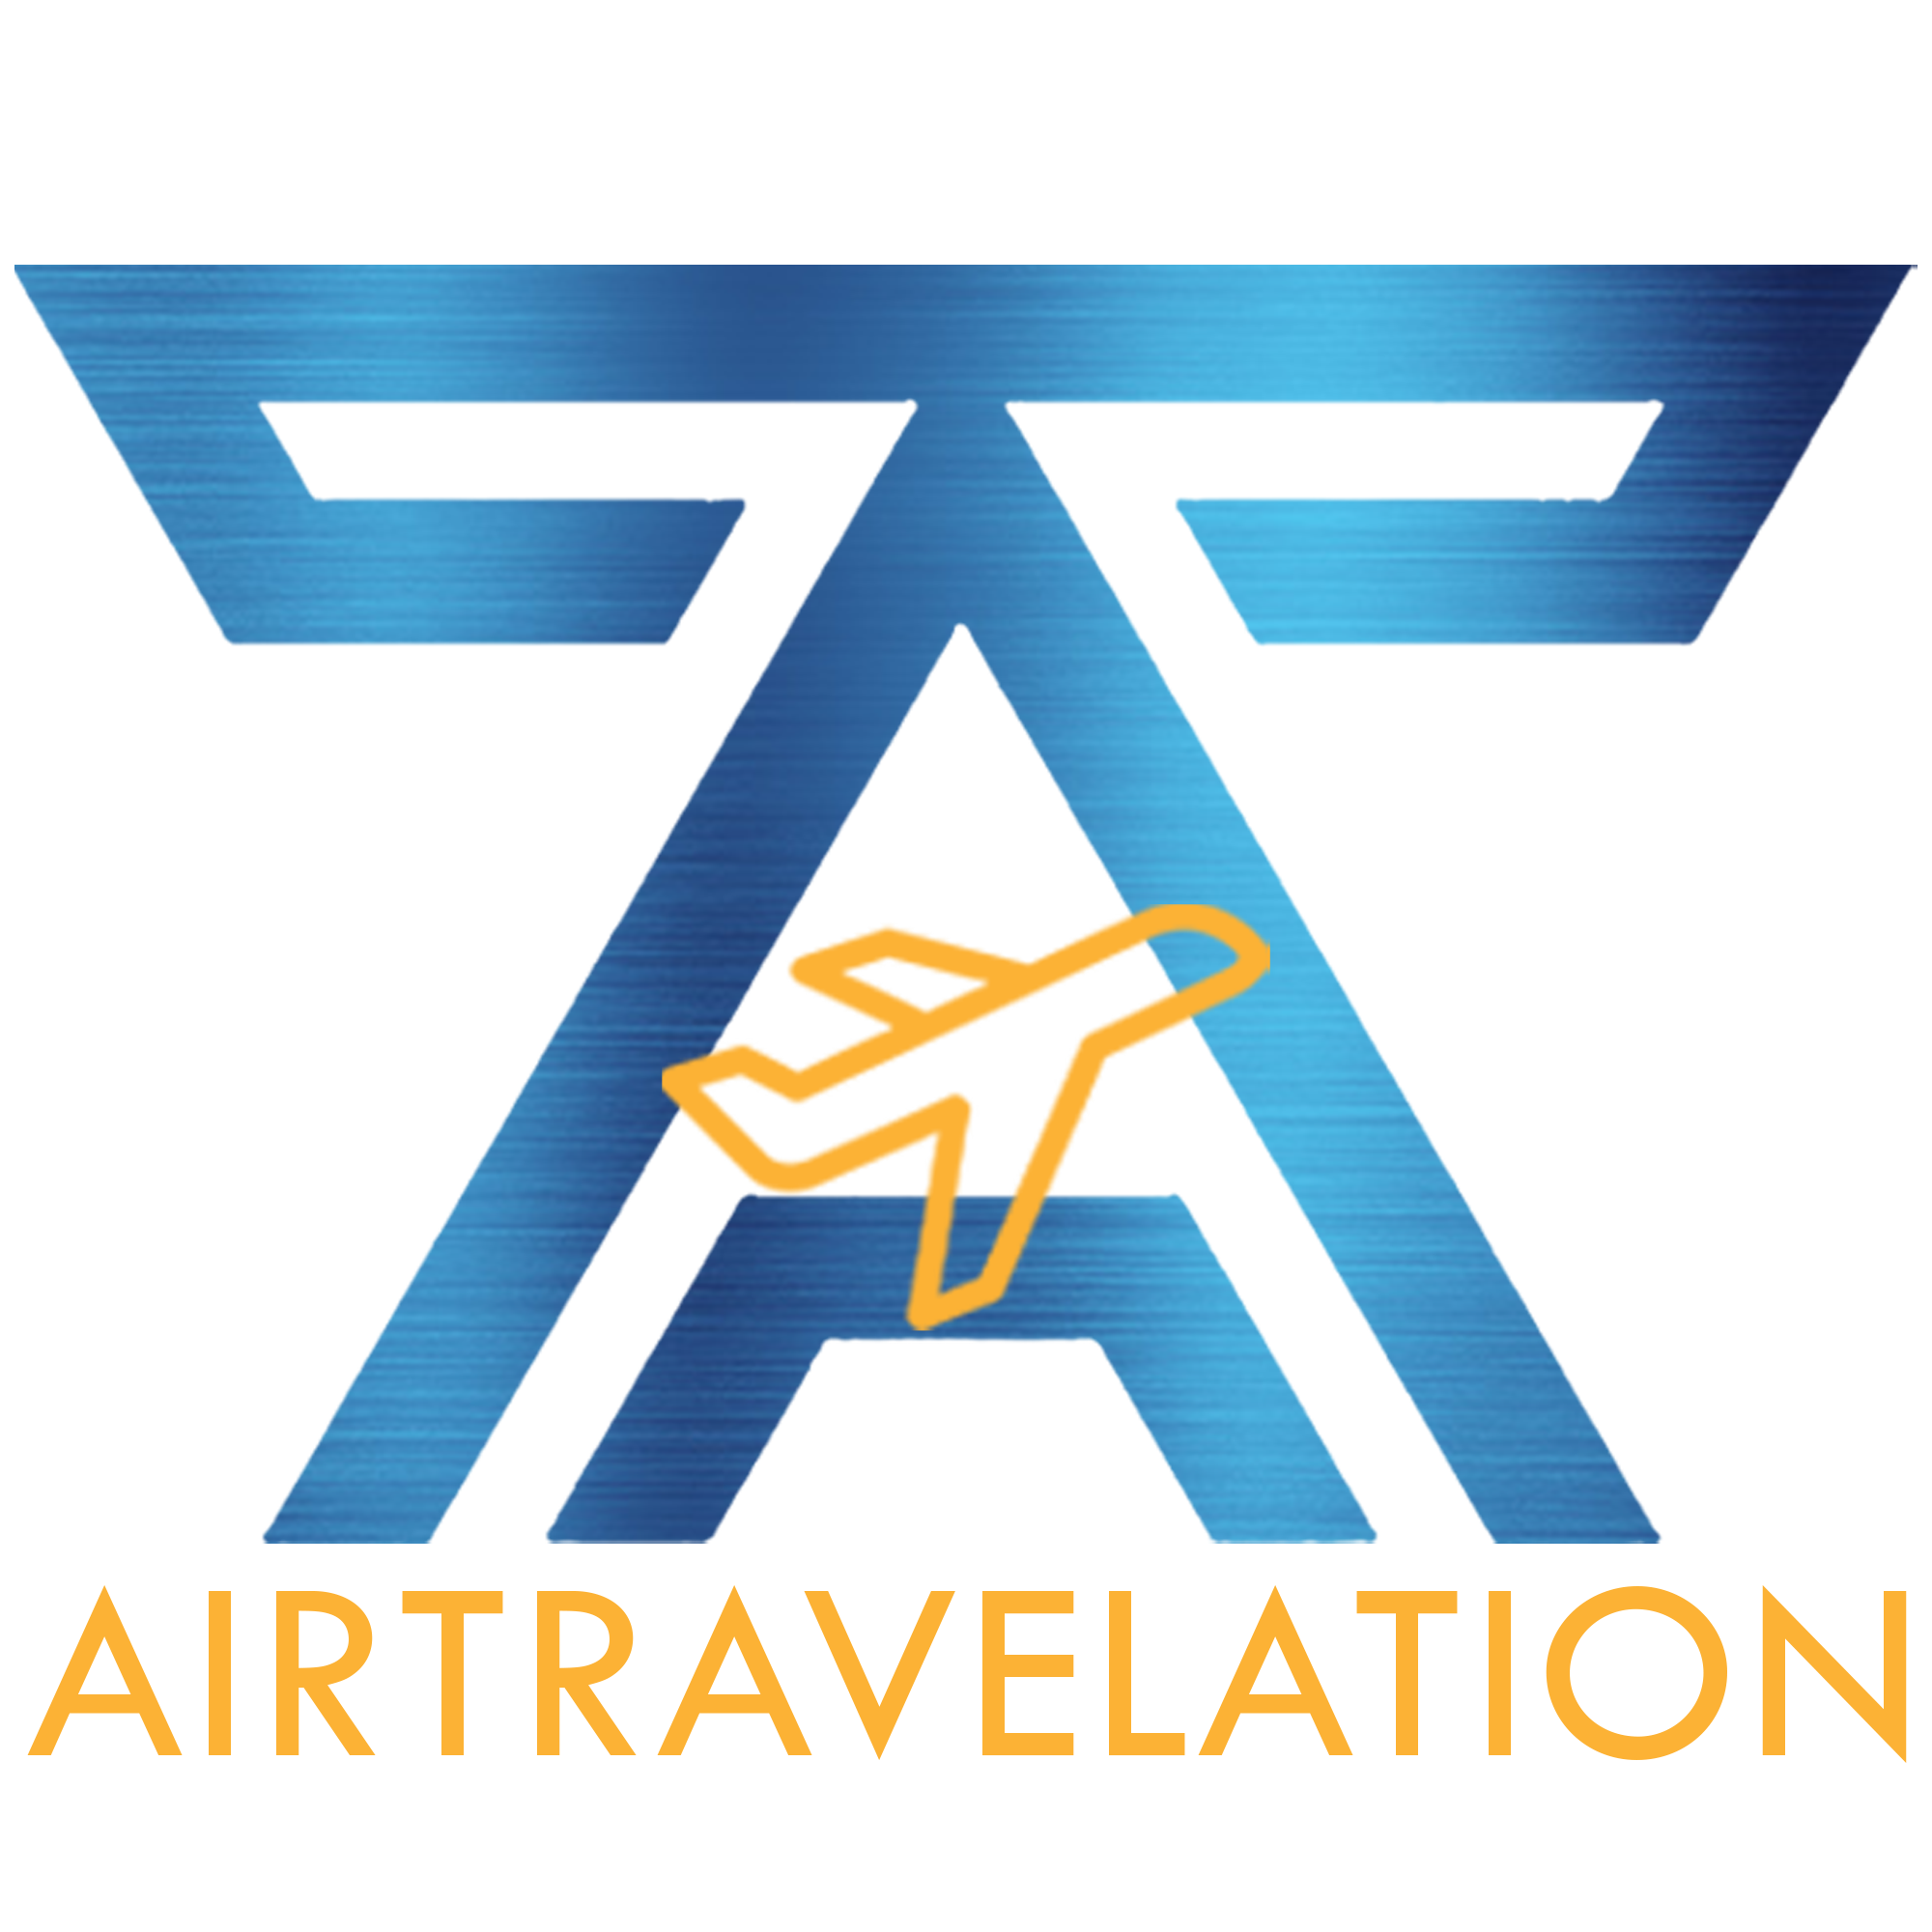 Air Travelation